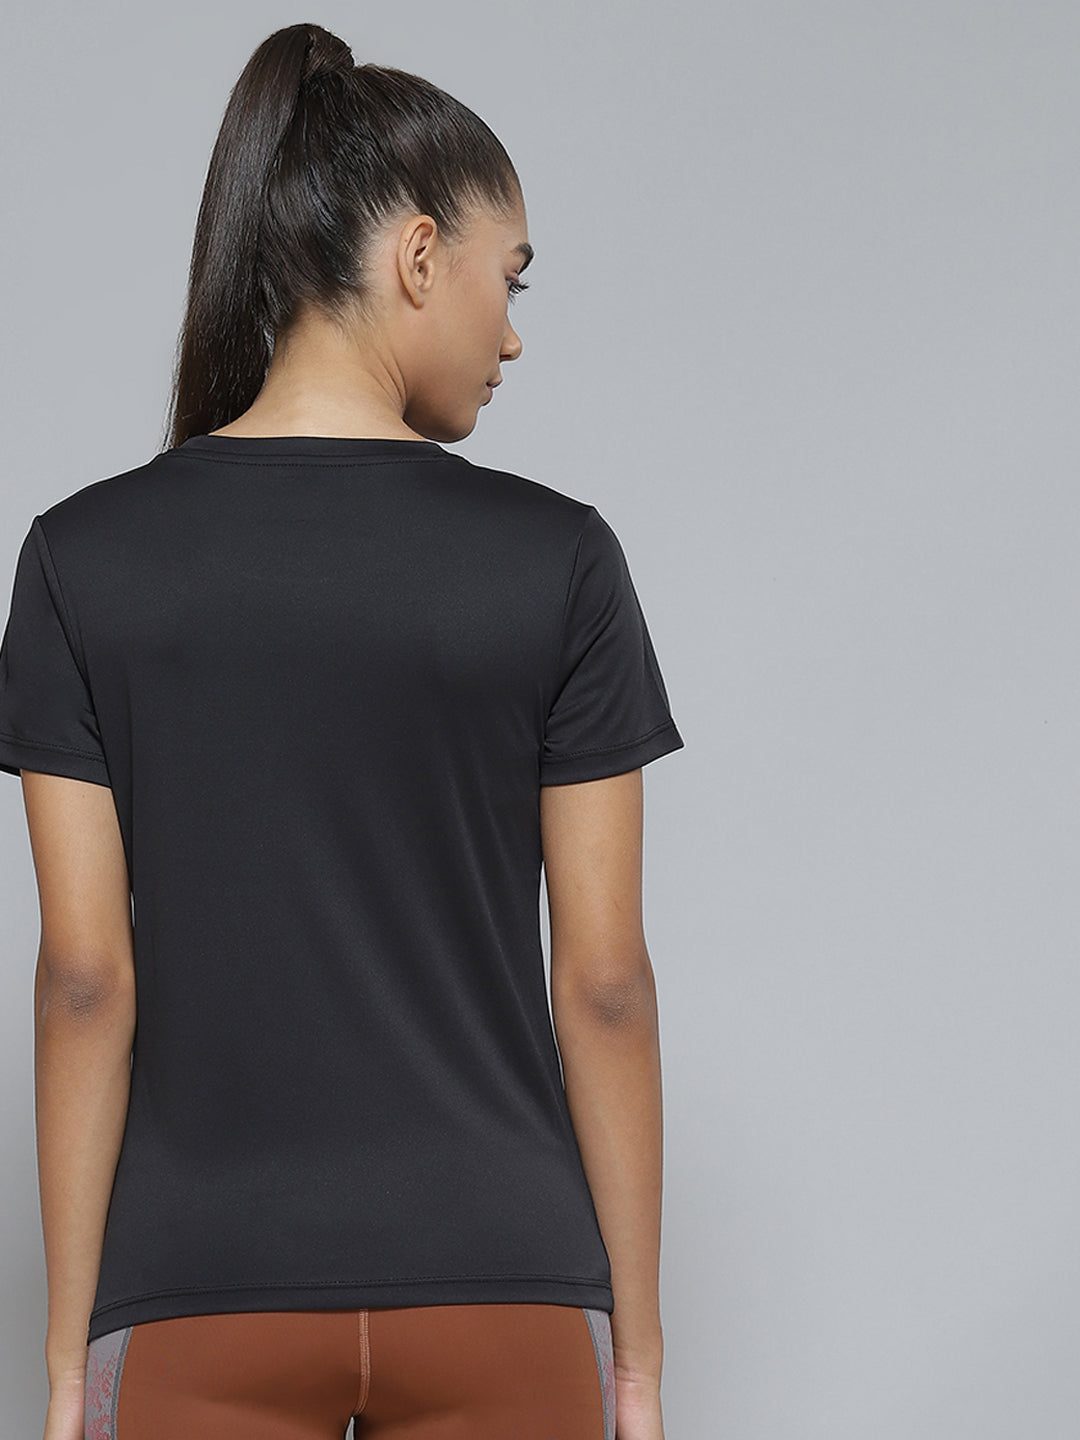 Alcis Women Black Typography Printed Slim Fit T-shirt